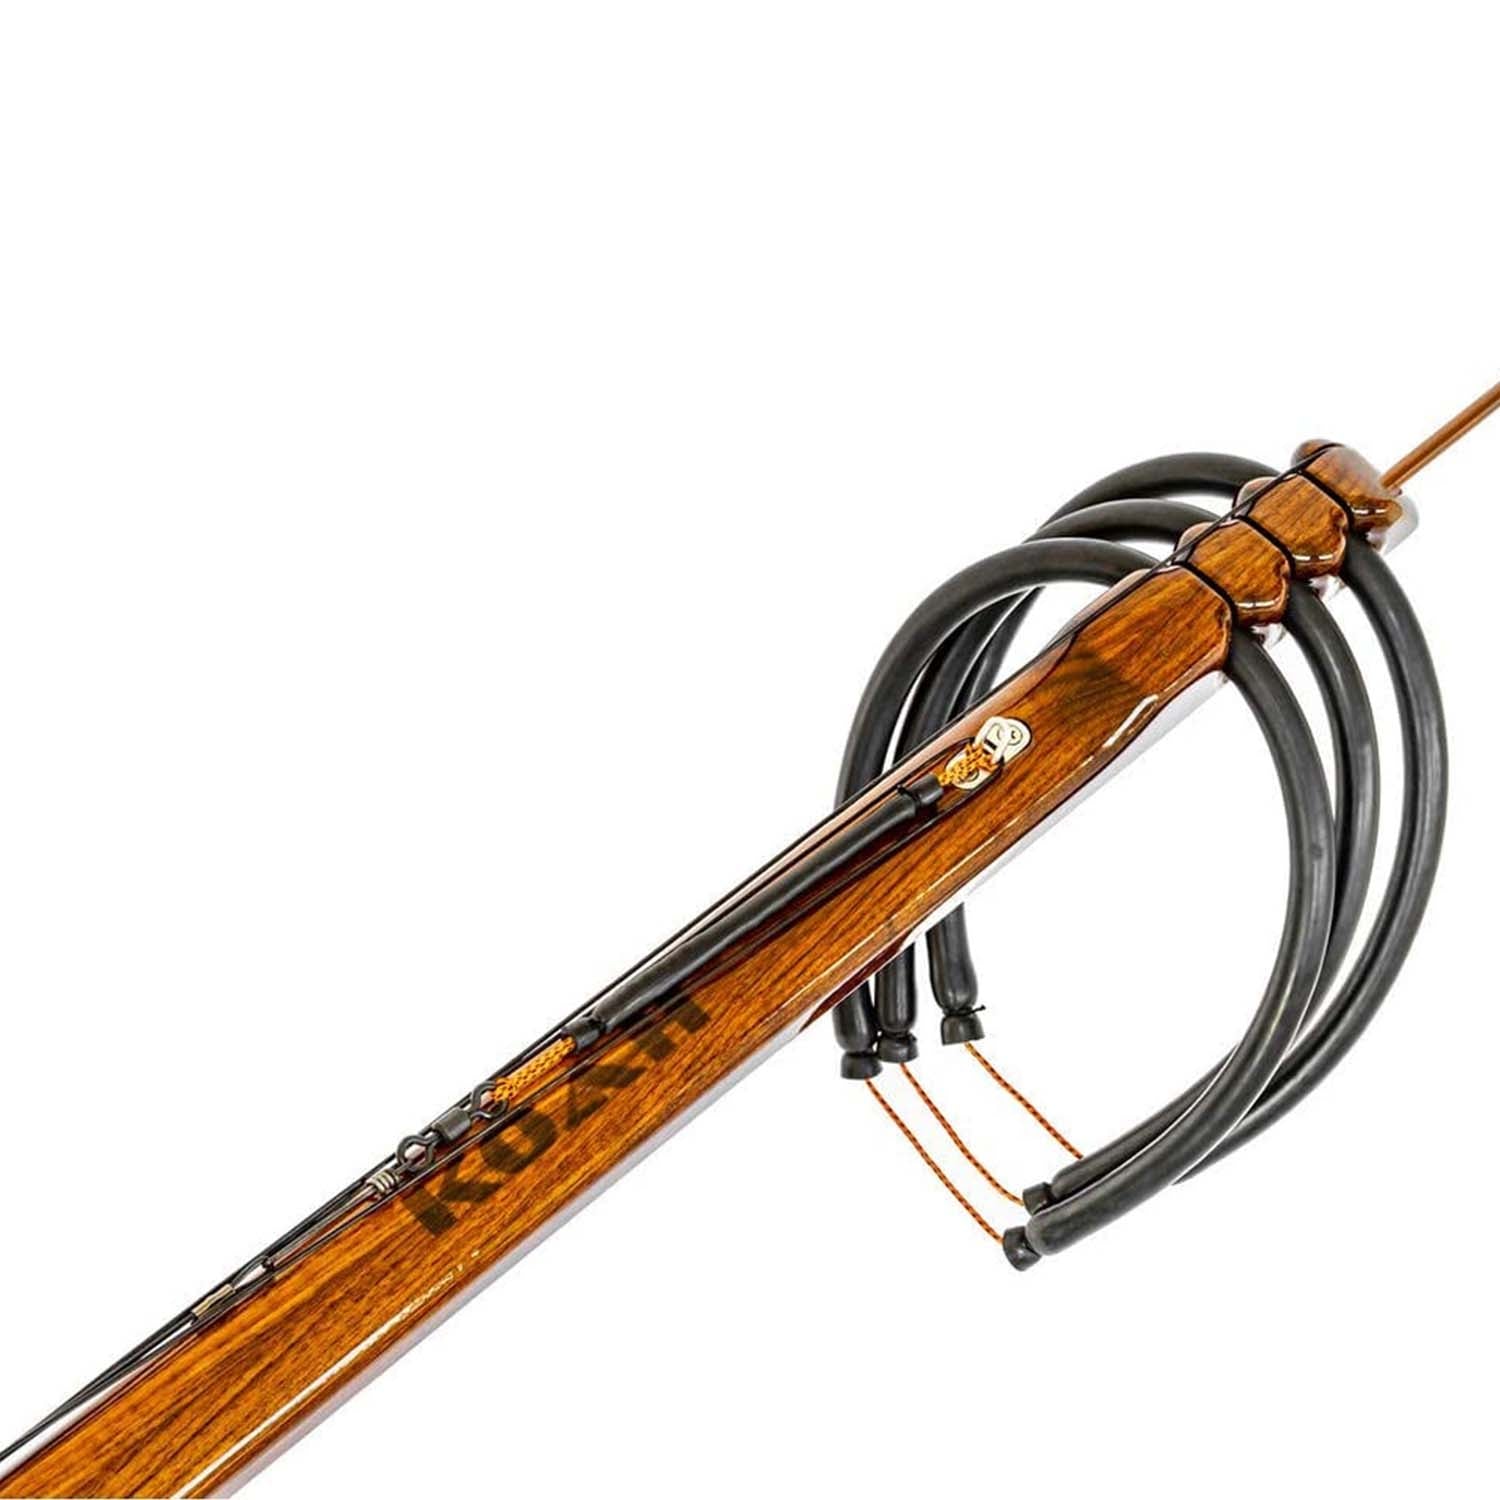 AB Biller Teak Floridian 48 Special Wood Spear Gun - Teak 48 inch for  Spearfishing, Freediving or Scuba